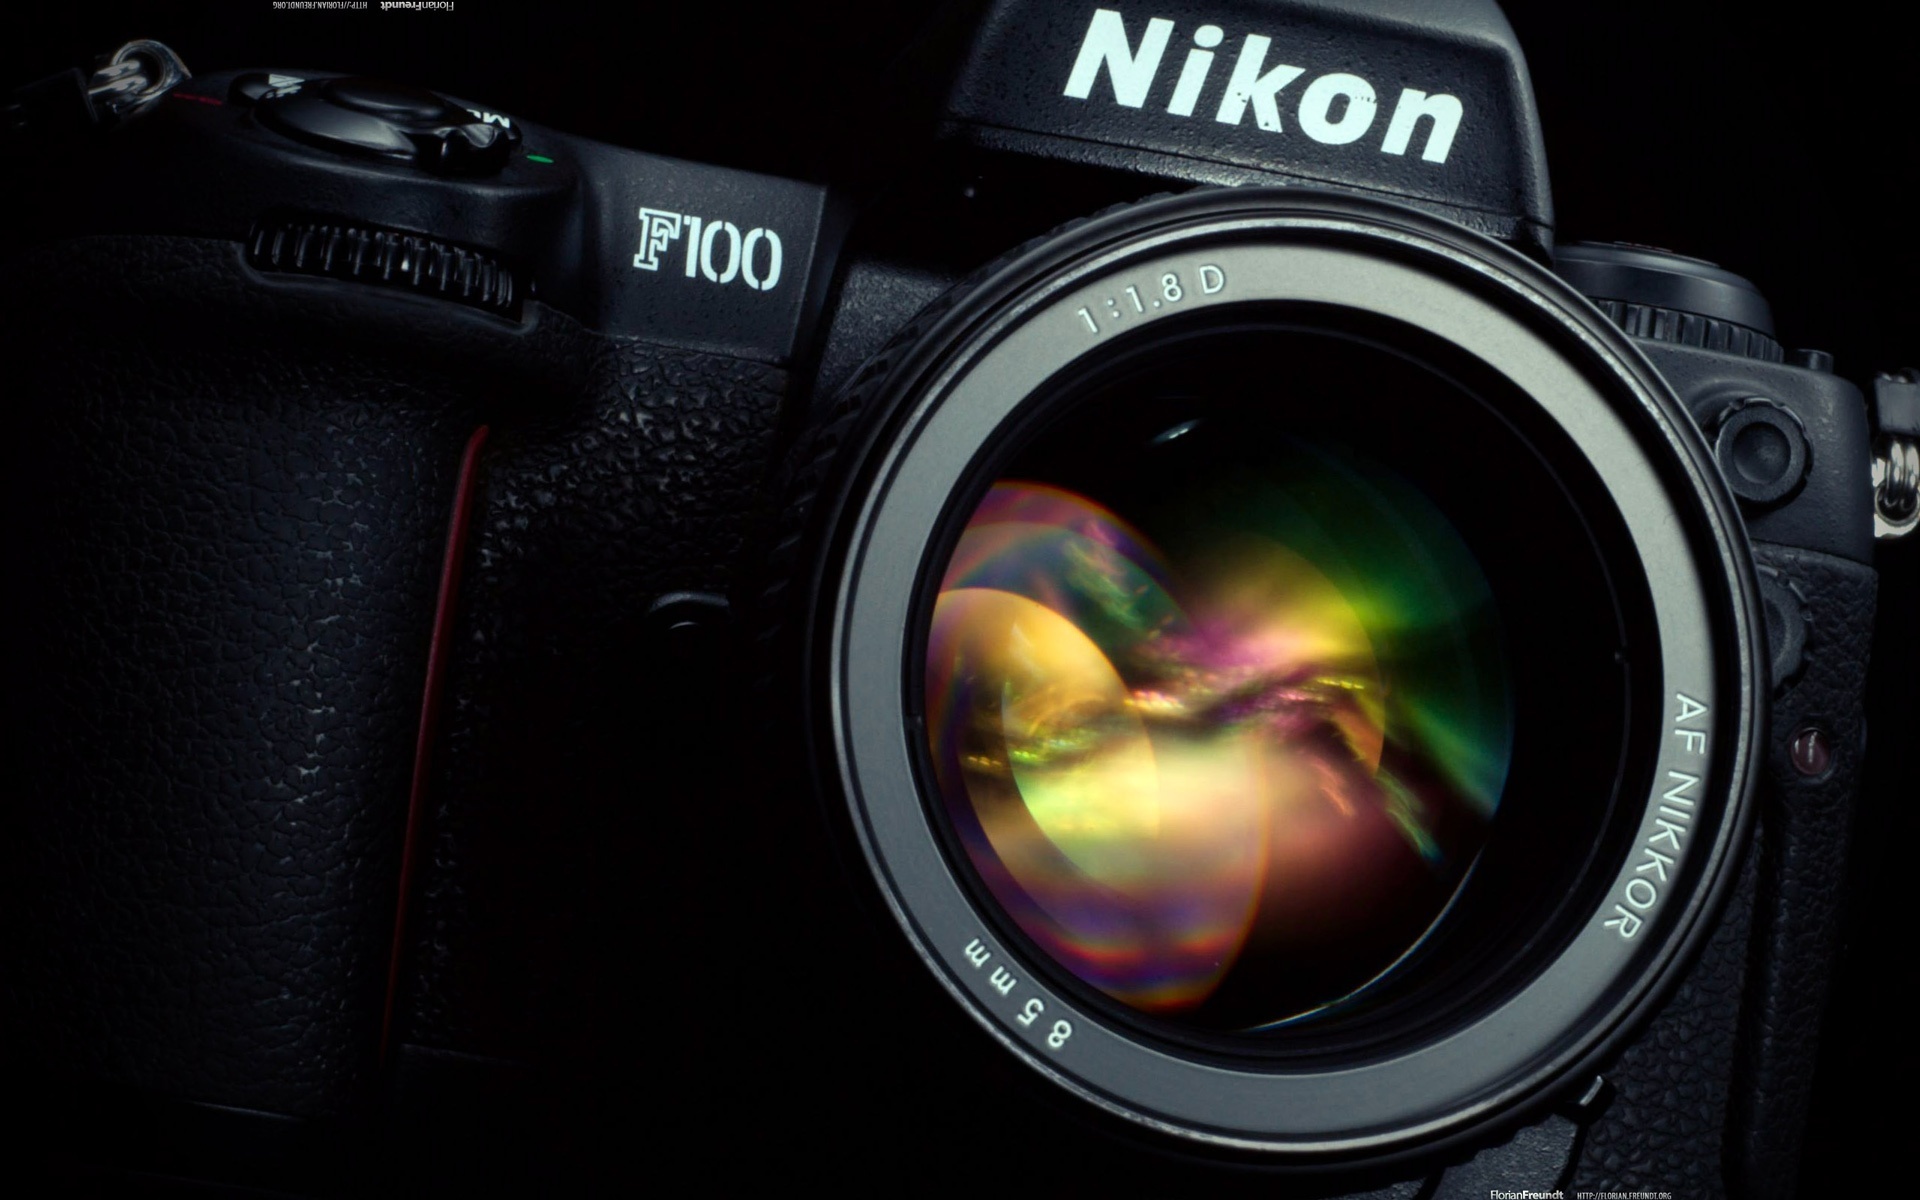 Backgrounds Camera Nikon F 100 body professional SLR film camera